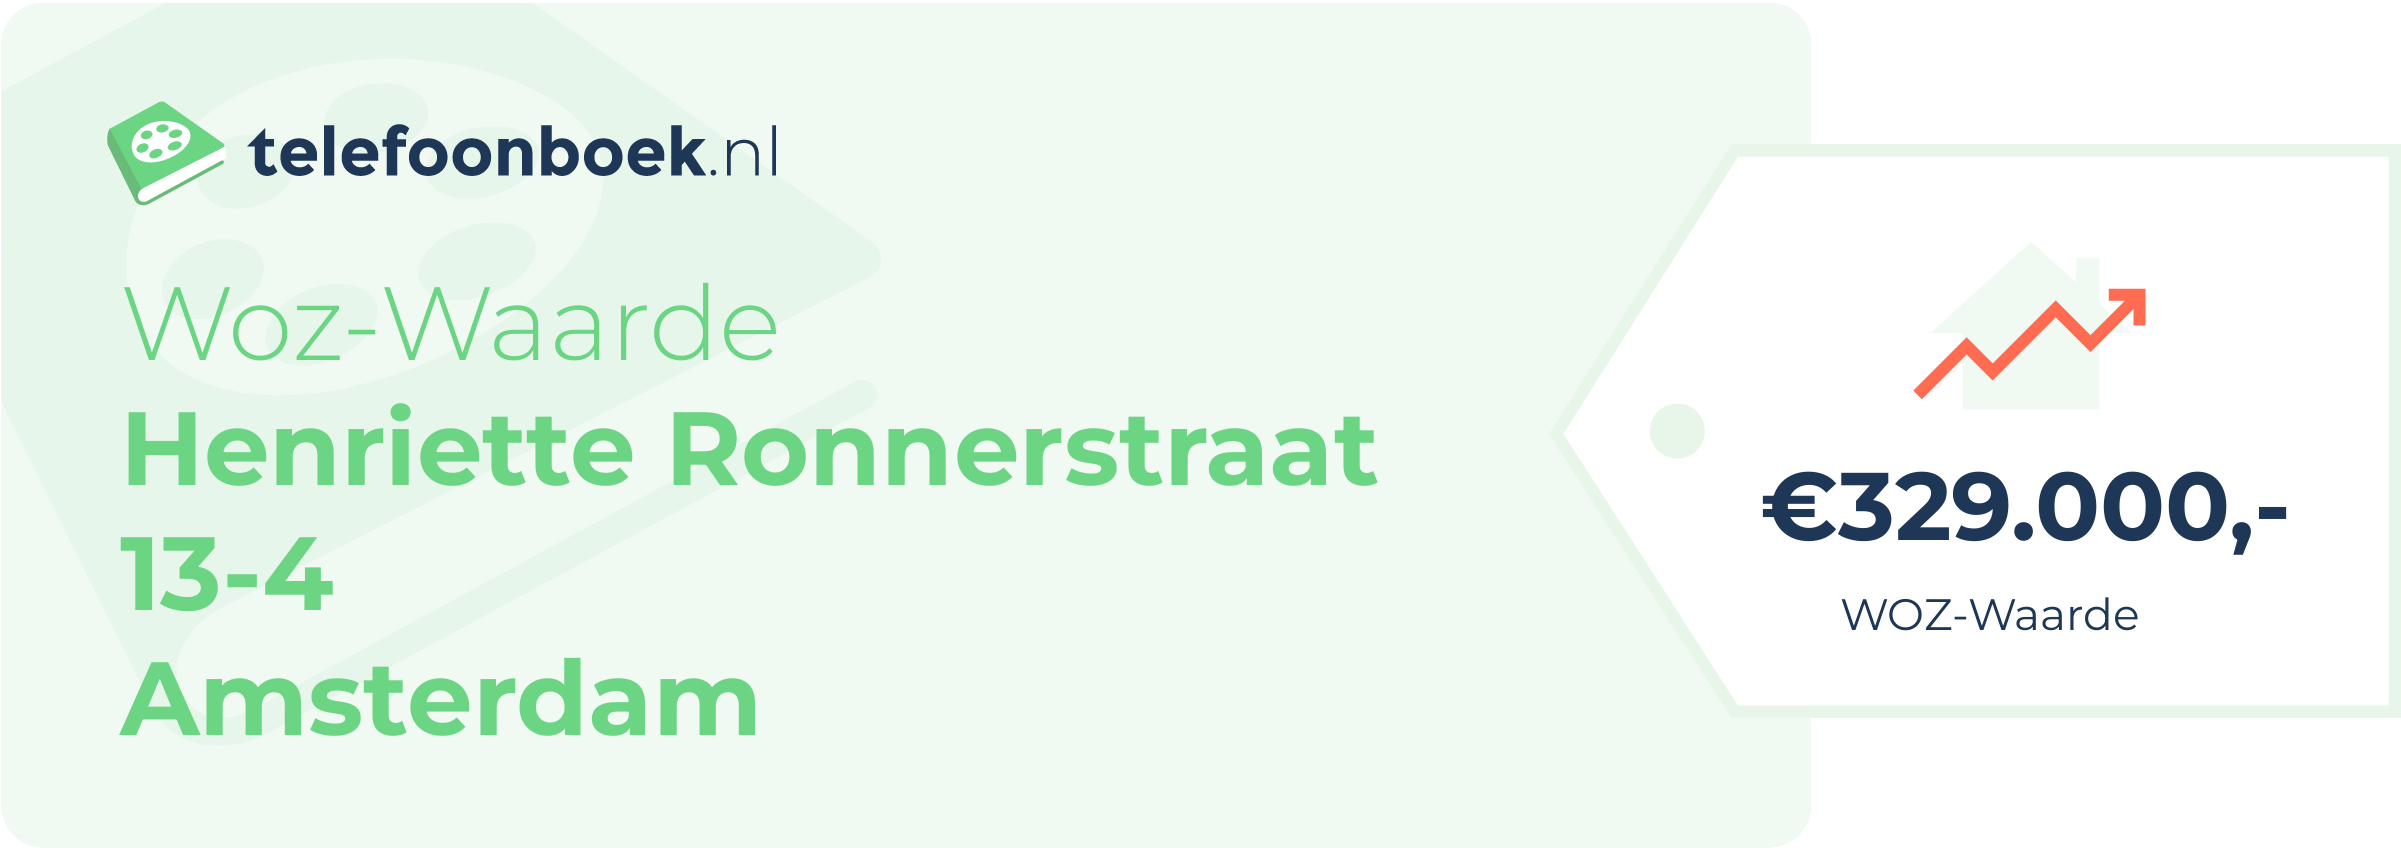 WOZ-waarde Henriette Ronnerstraat 13-4 Amsterdam